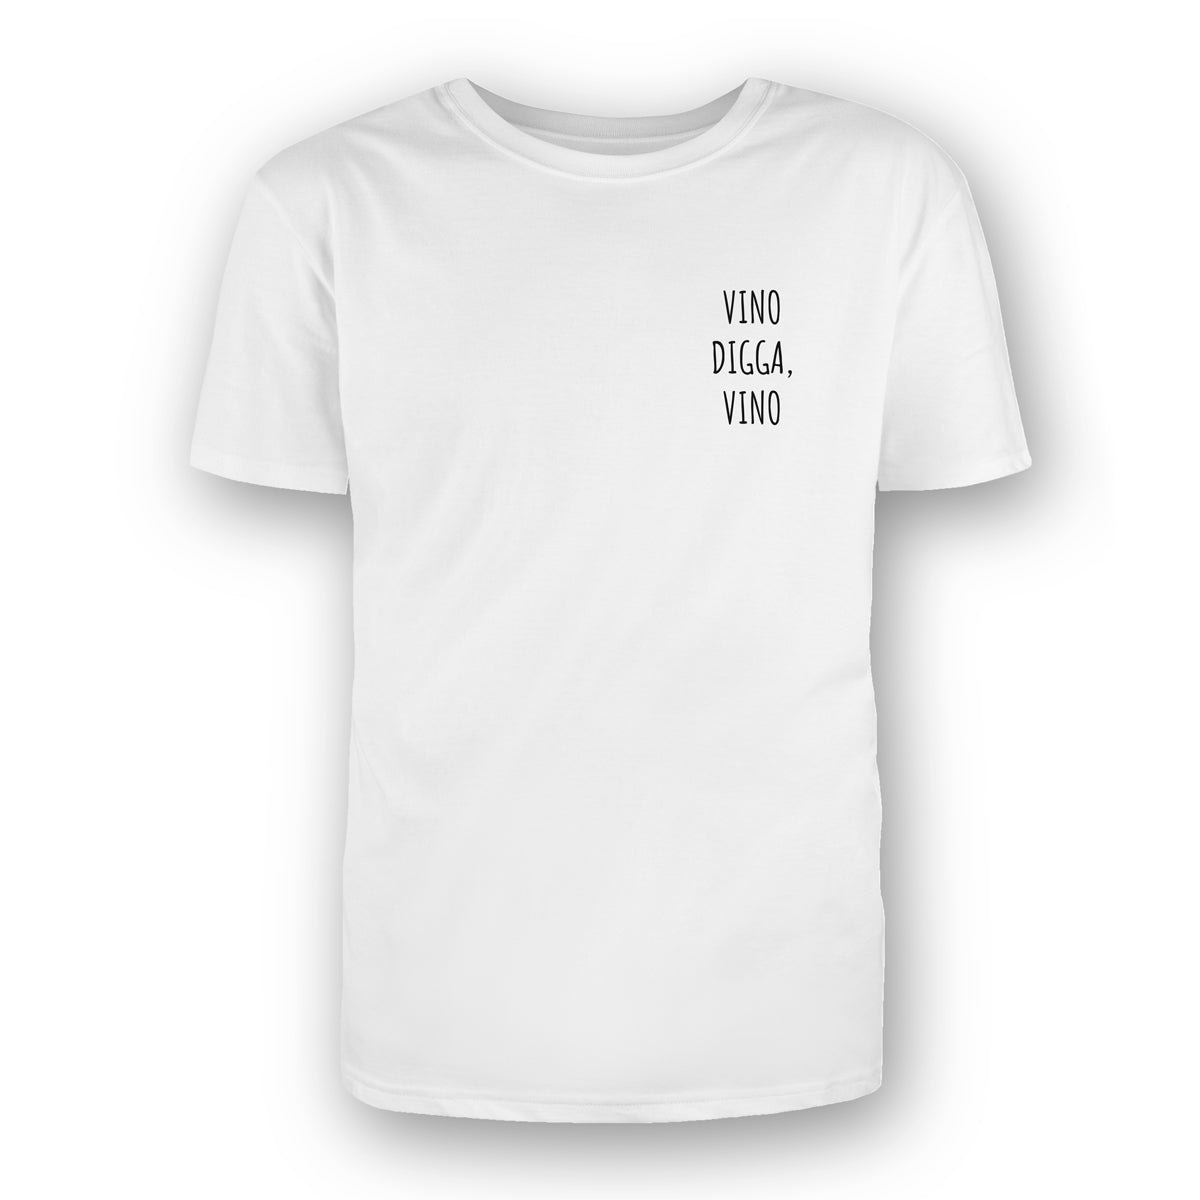 VINO DIGGA VINO - Unisex T-Shirt